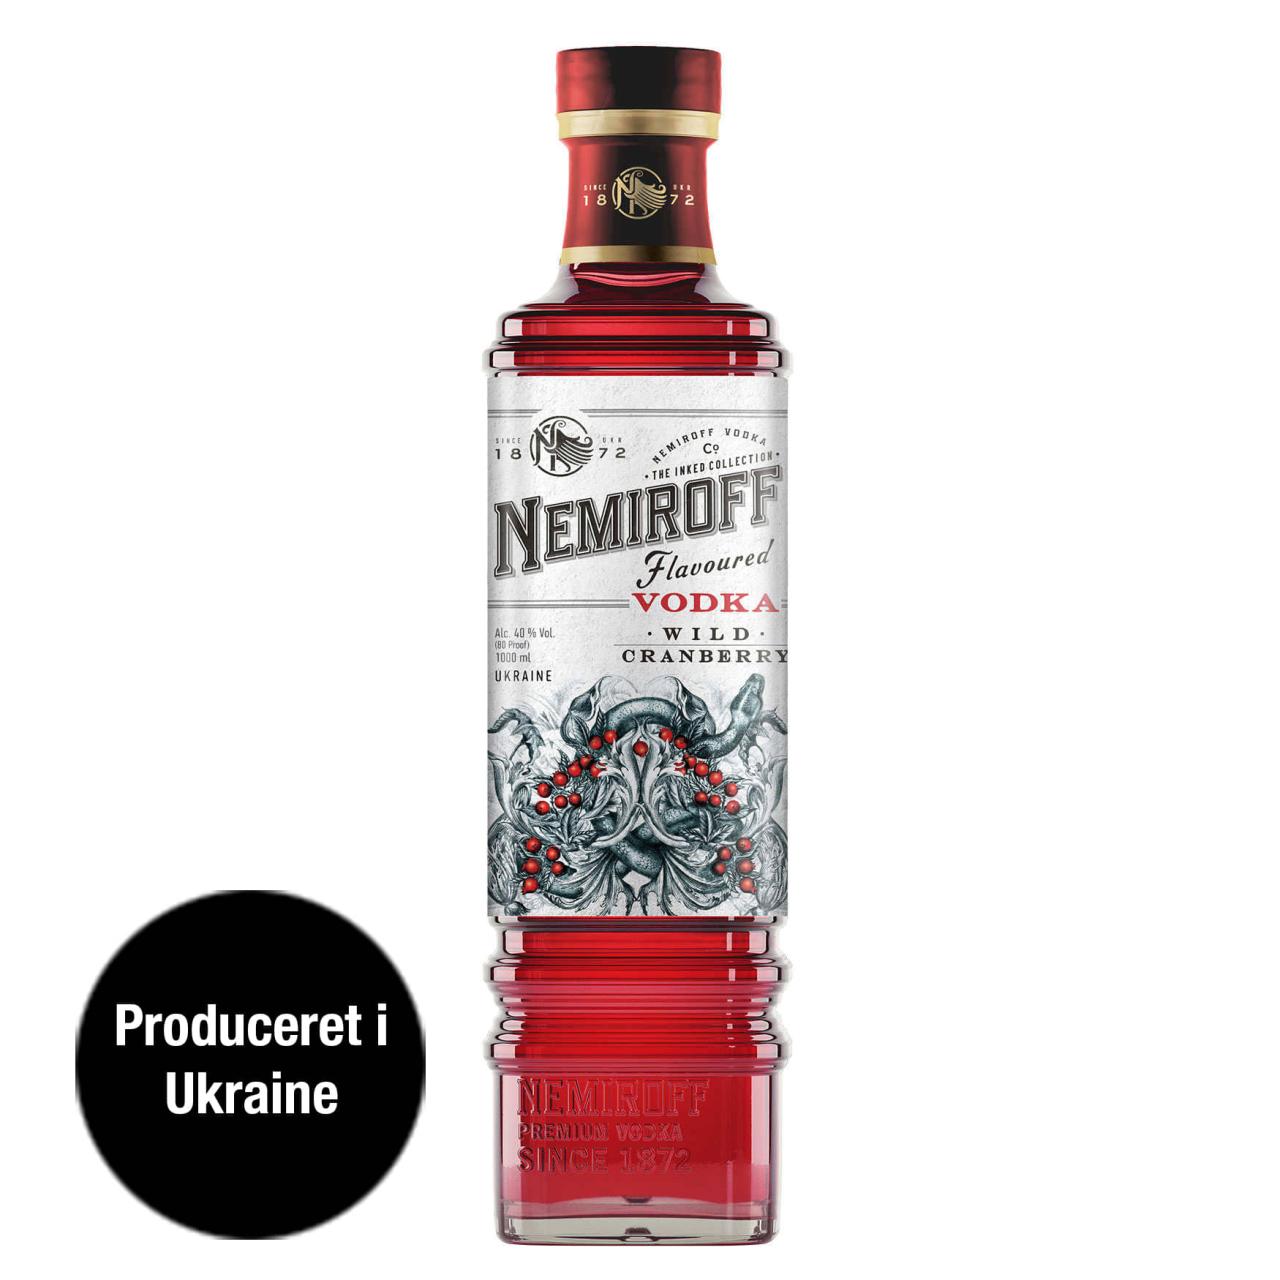 Nemiroff Wild Cranberry Vodka 40% 1,0l